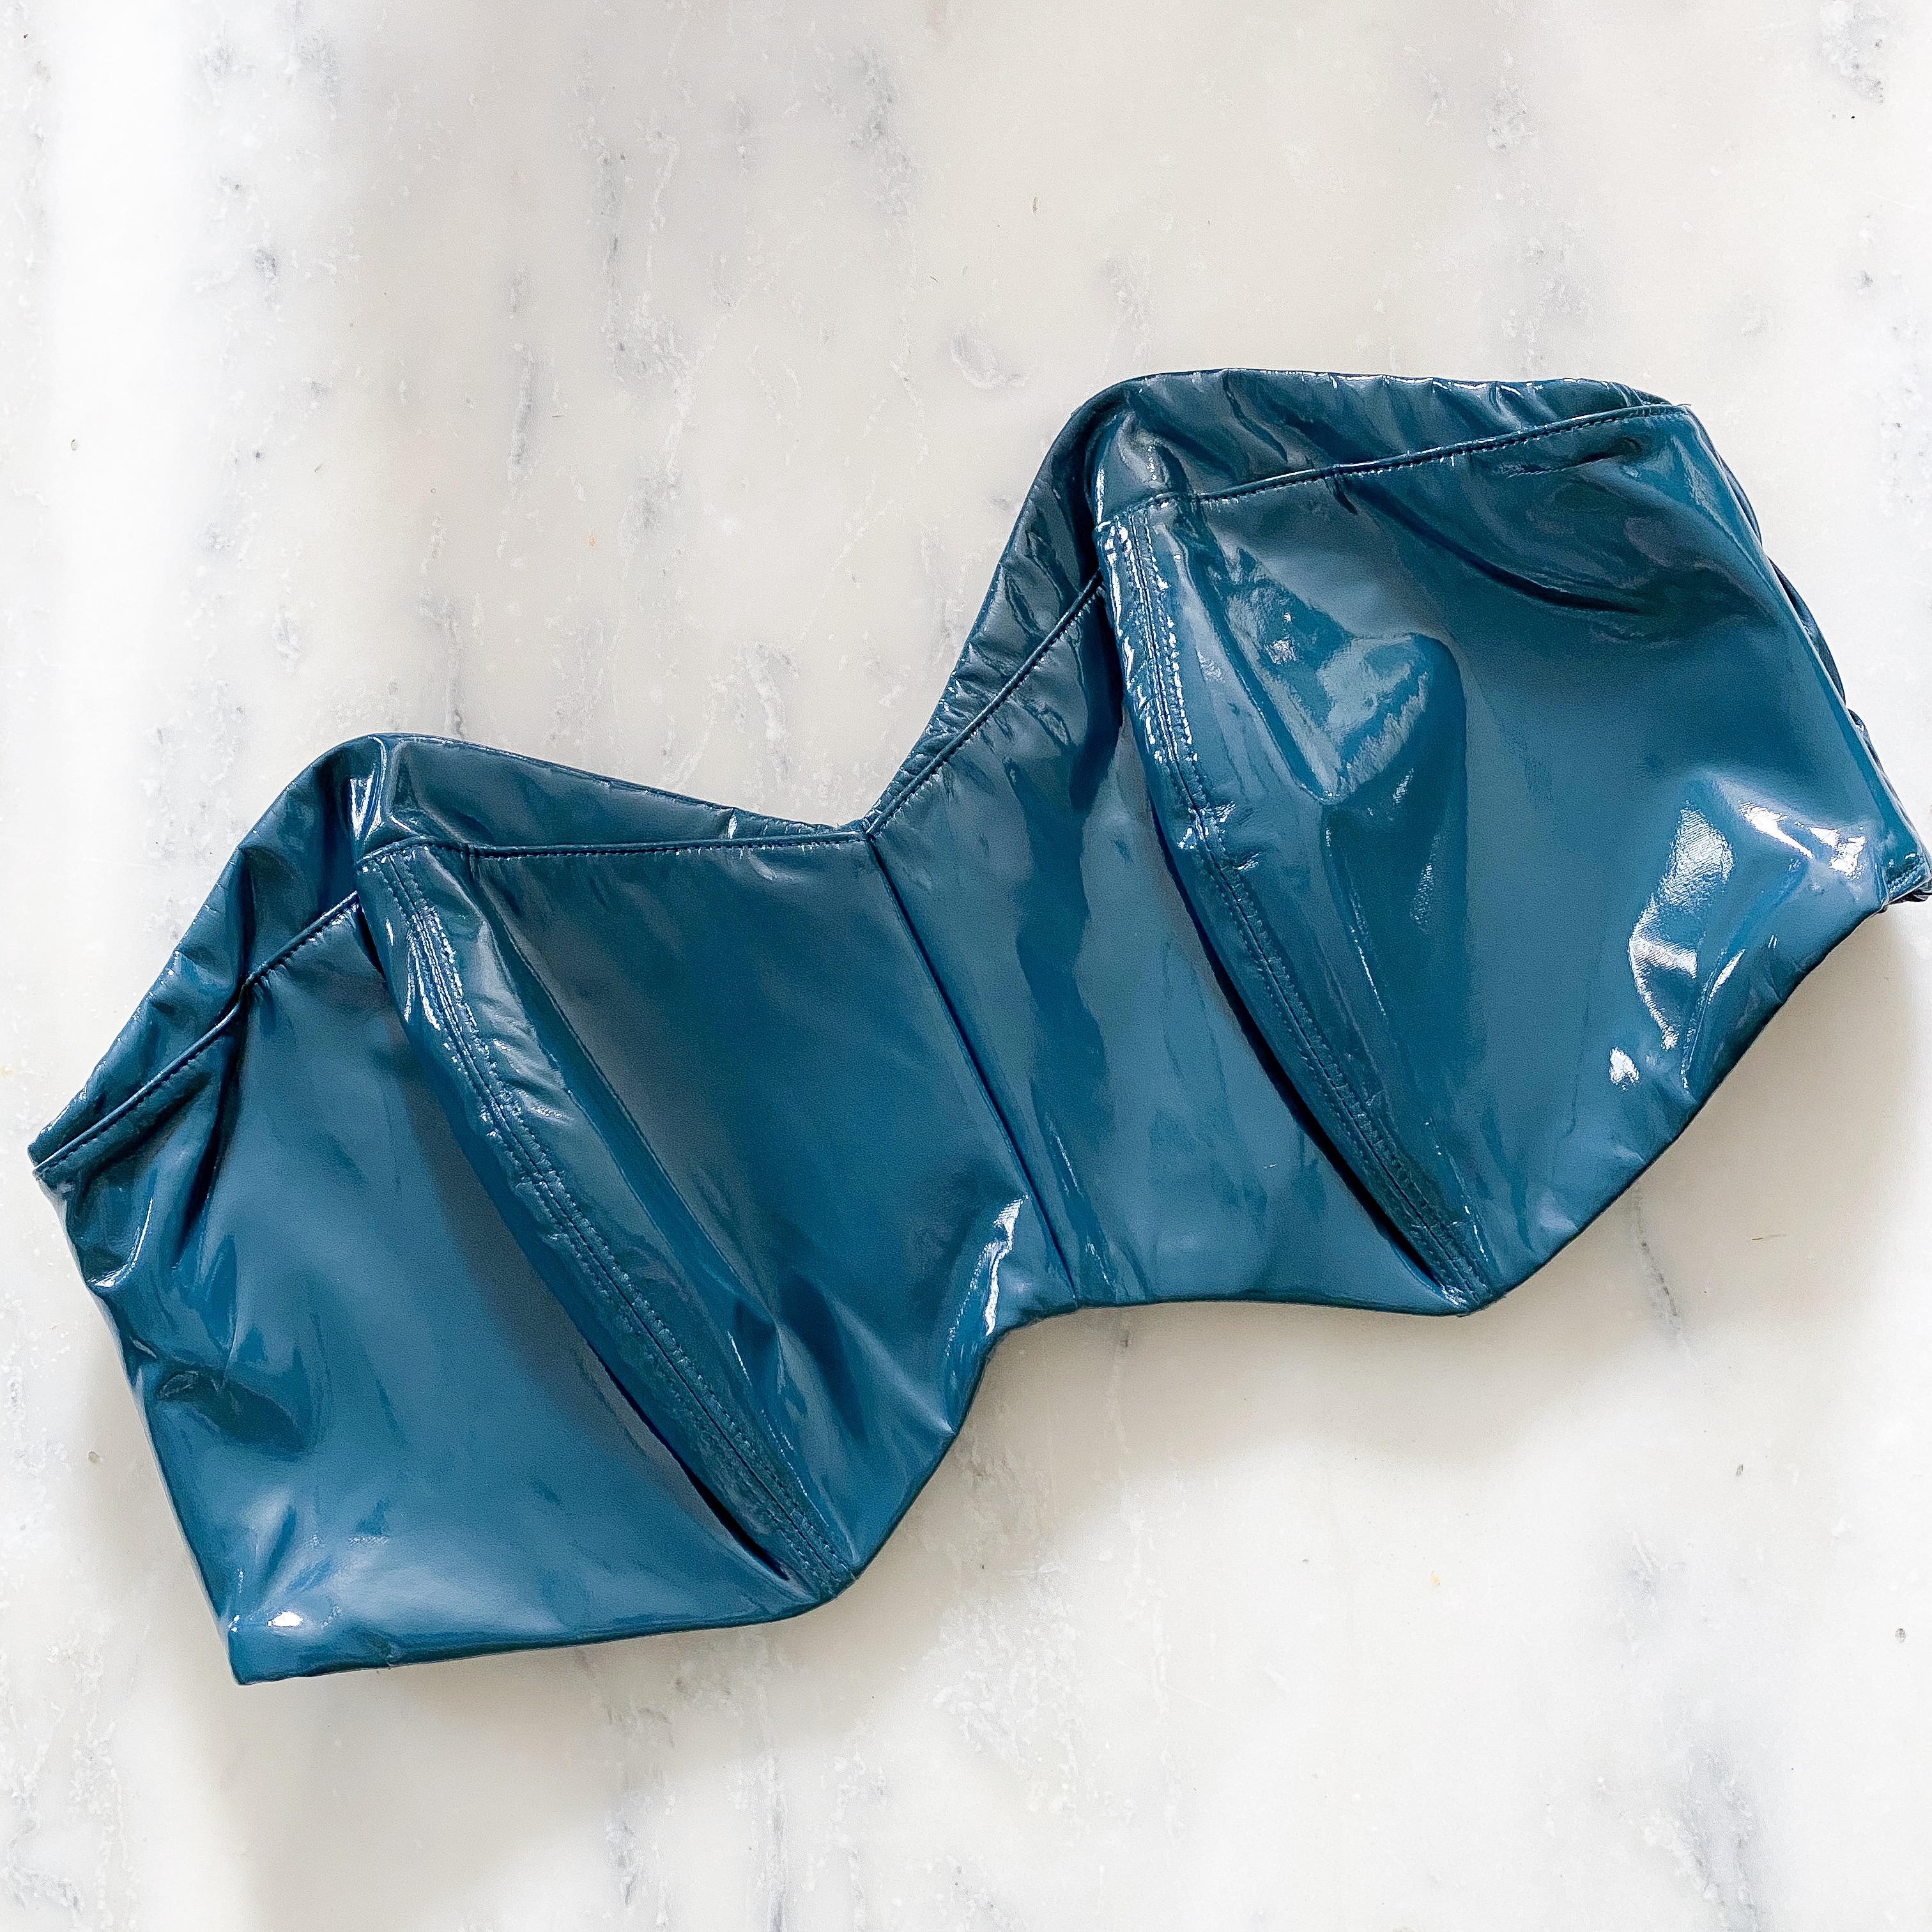 Leather Tease Vinyl Bandeau Bralette in Blue & Green